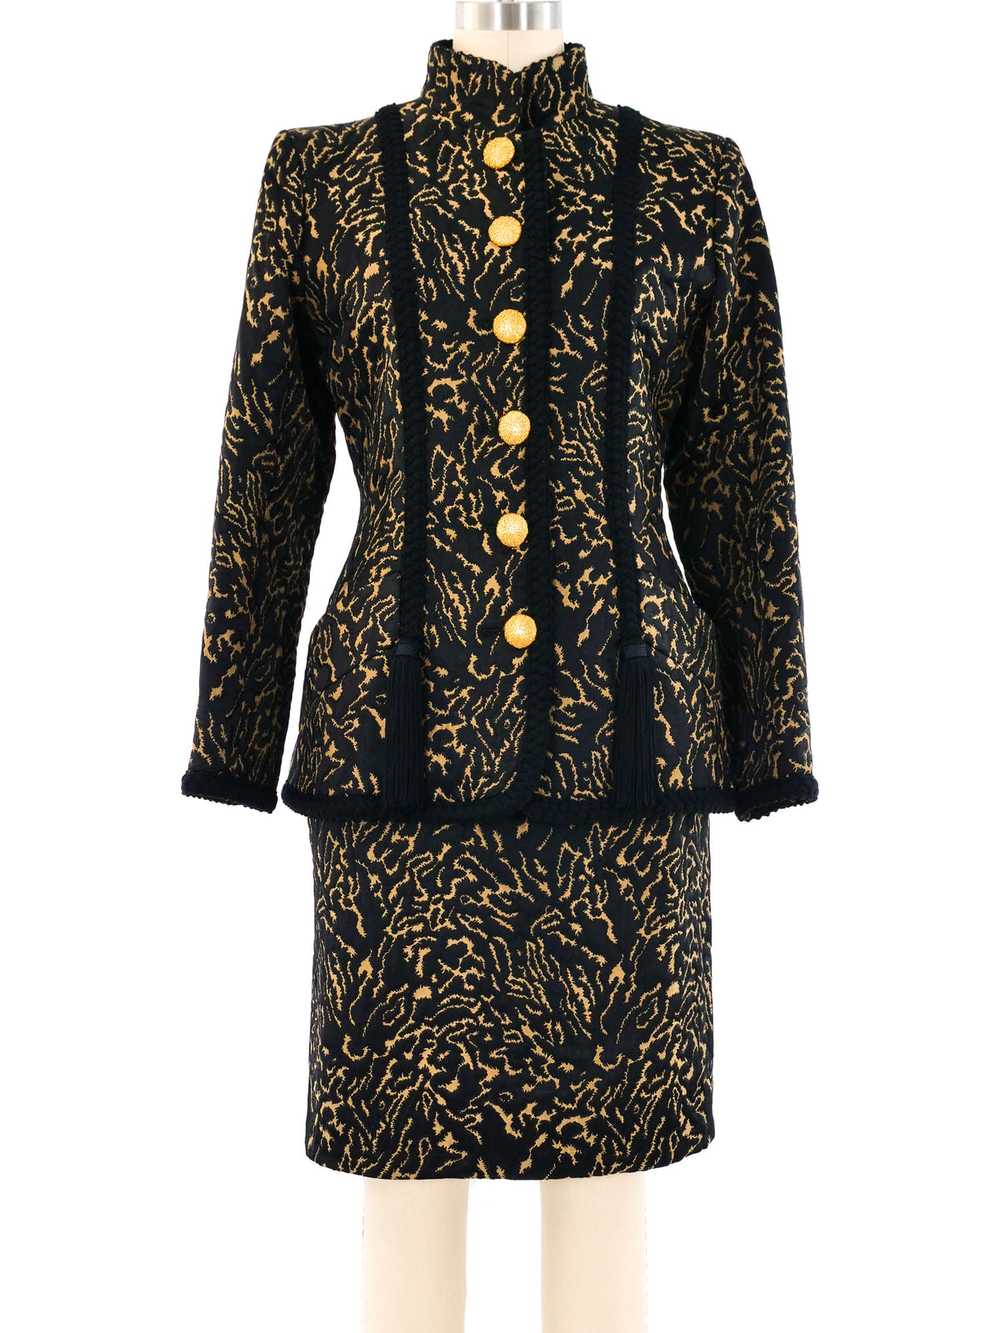 Yves Saint Laurent Brocade Skirt Suit - image 1